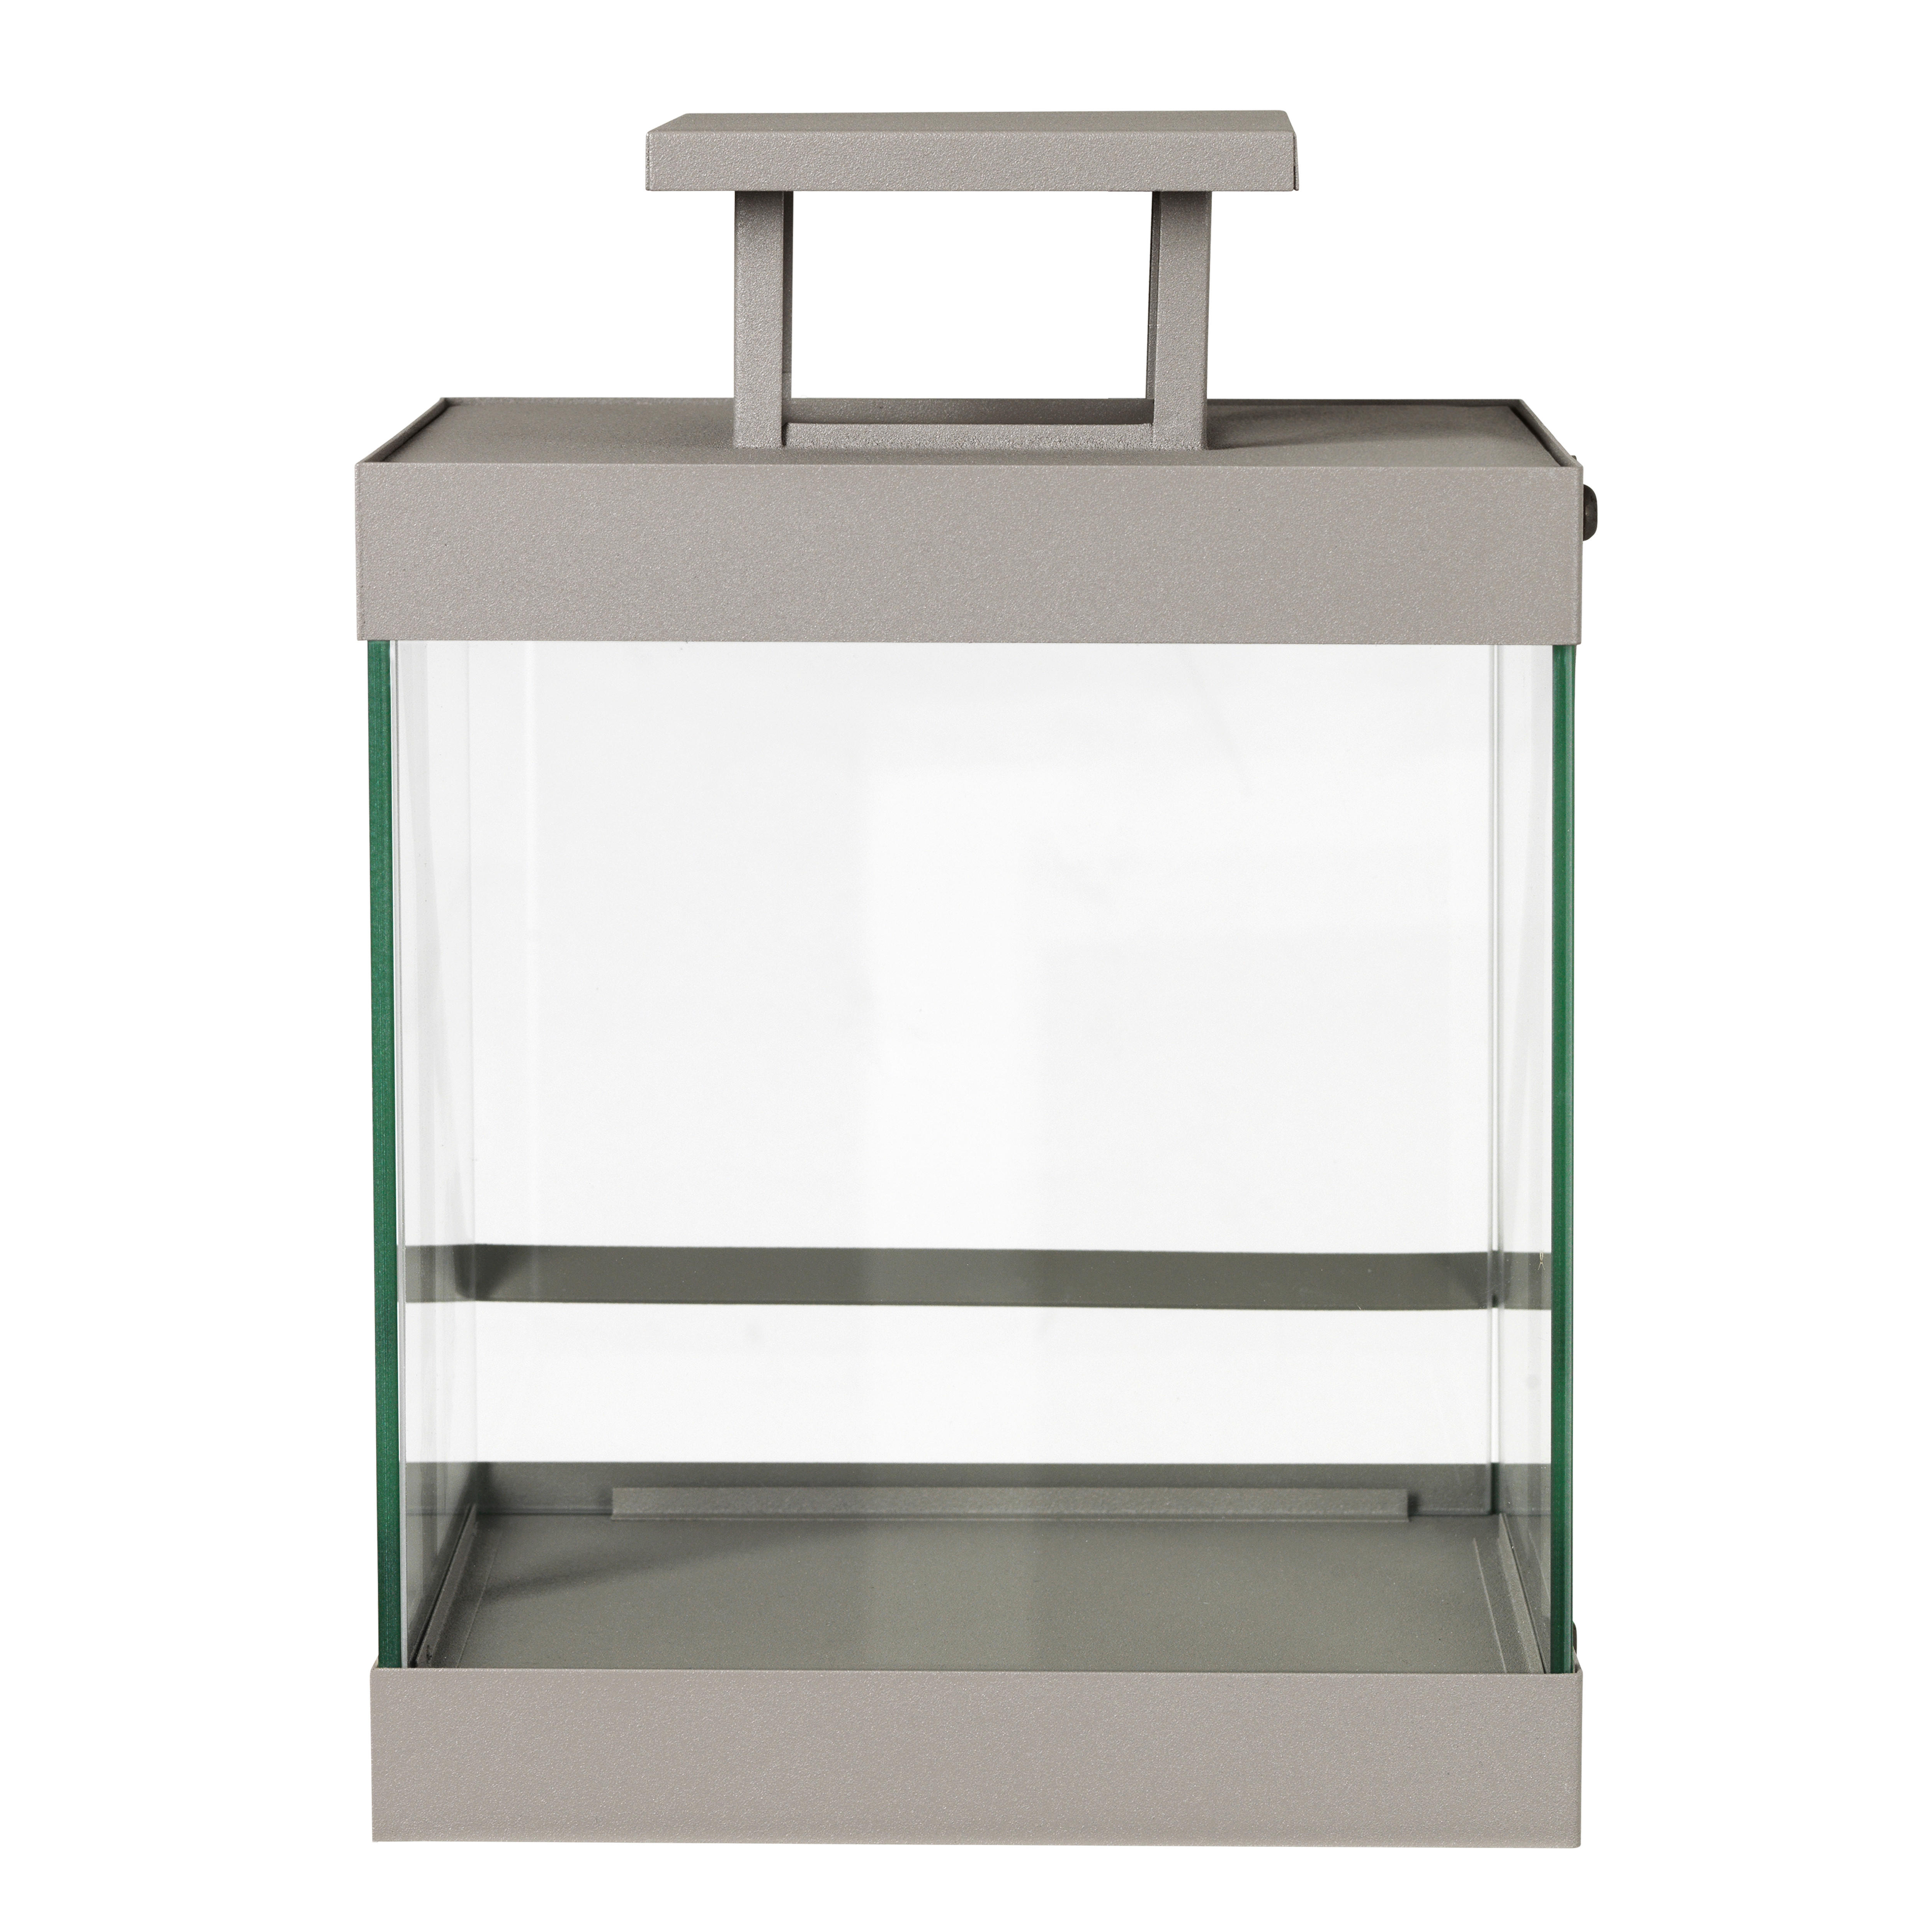 LATERNE - Beige, Design, Glas/Metall (20/20/41,5cm) - Blomus